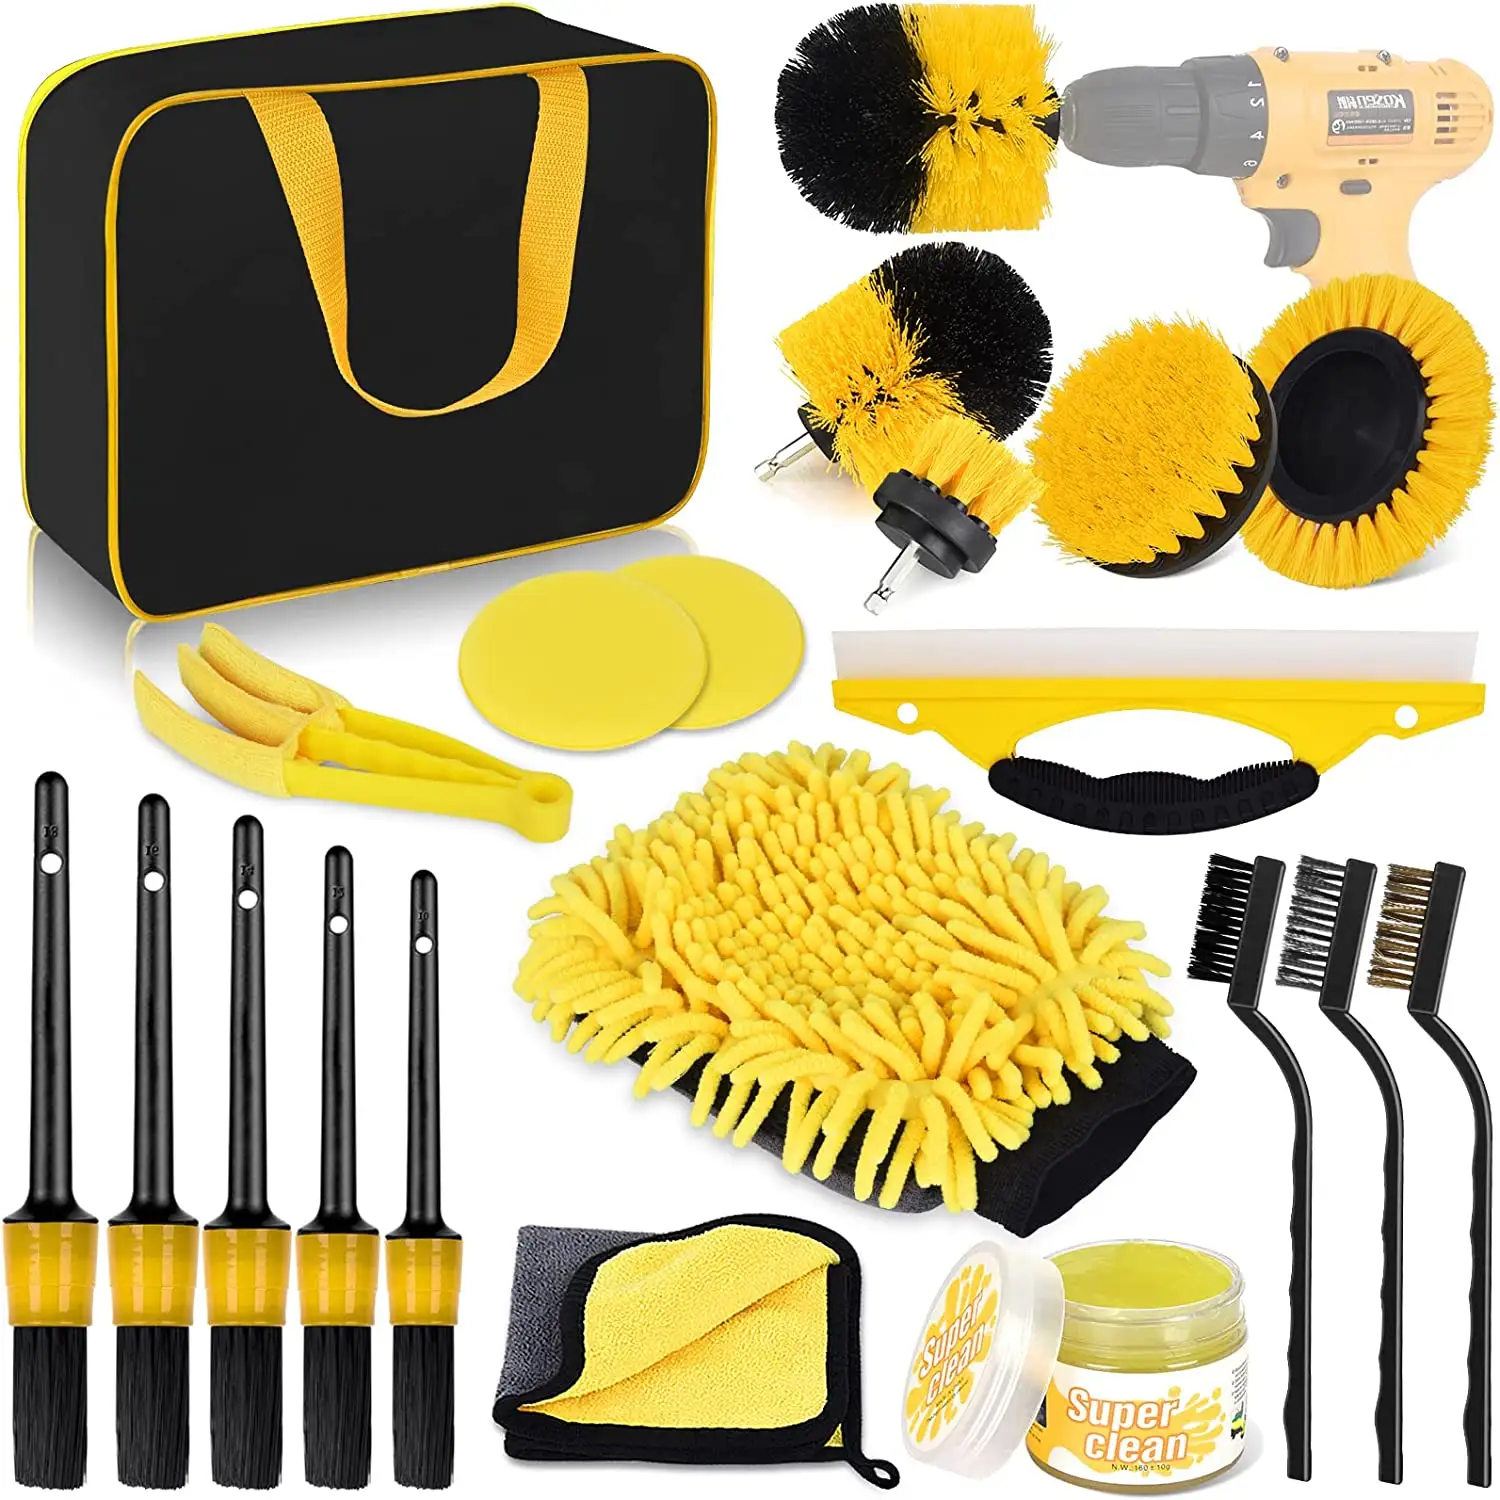 20 Pcs Car Cleaning Tools Kit, Car Detailing Brush Set with Carry Bag, Auto Drill Brush Set Pro Car Wash Kit